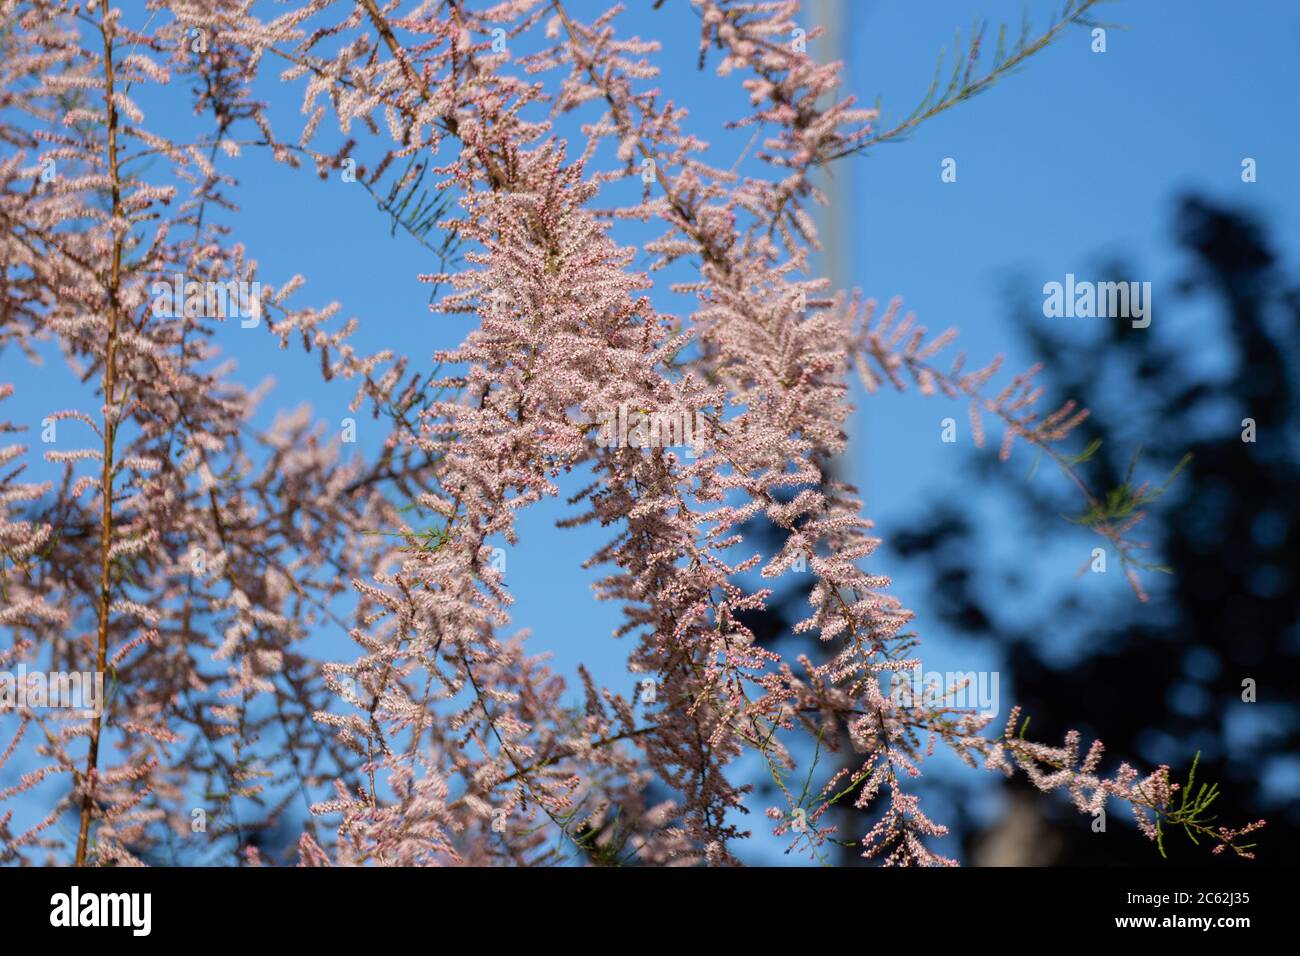 Pink flowers of a tamarisk with blue sky background, Tamarix gallica or tamariske Stock Photo